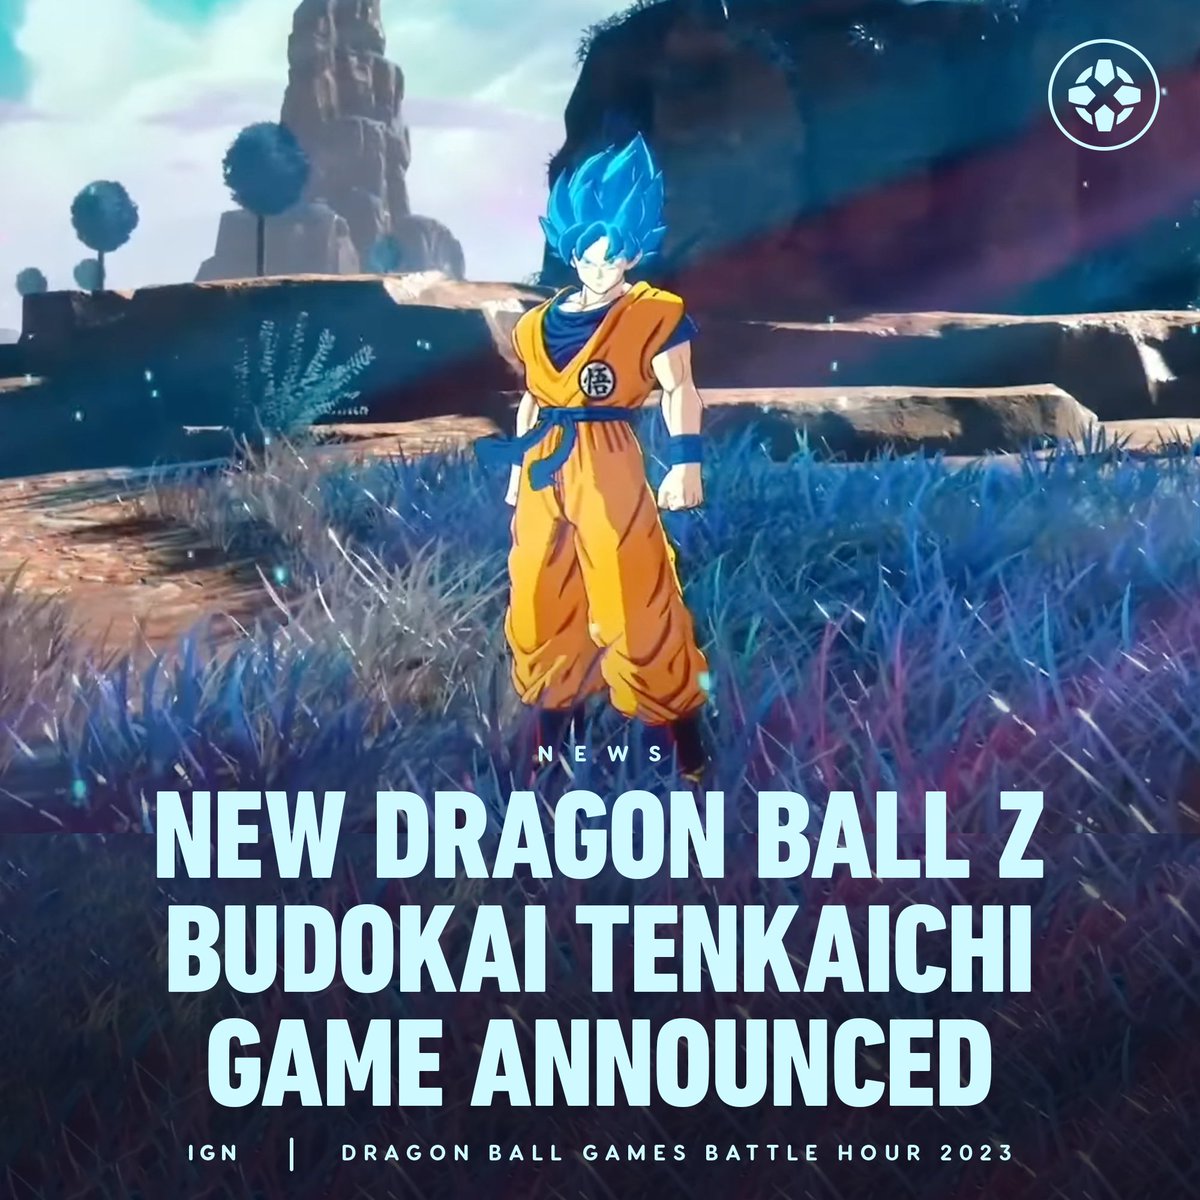 A New Dragon Ball Budokai Tenkaichi Game Has Been Announced